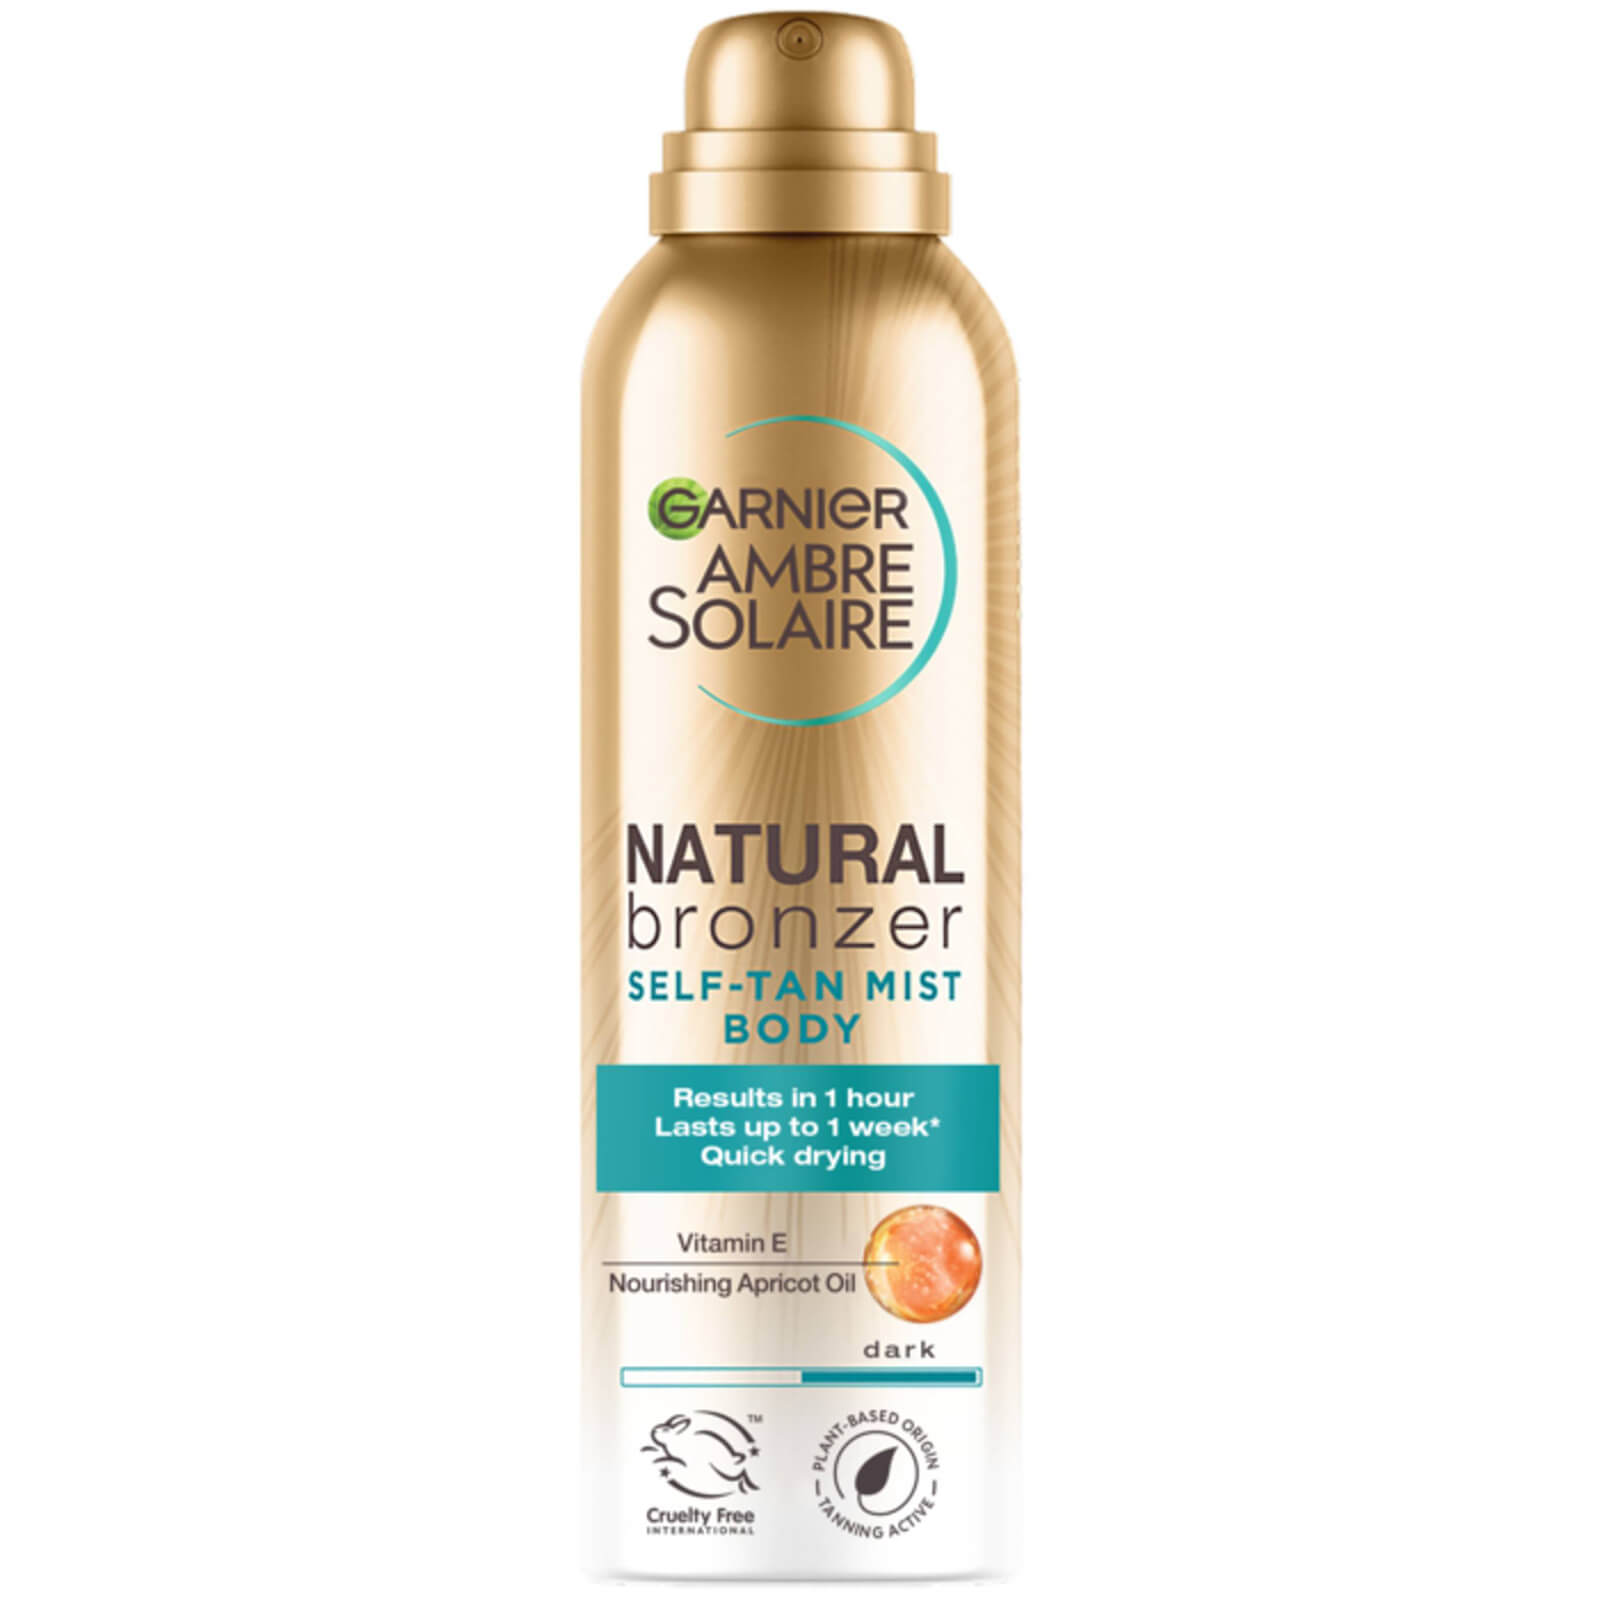 Photos - Face Powder / Blush Garnier Ambre Solaire Natural Bronzer Quick Drying Self Tan Body Mist Dark 150ml C 